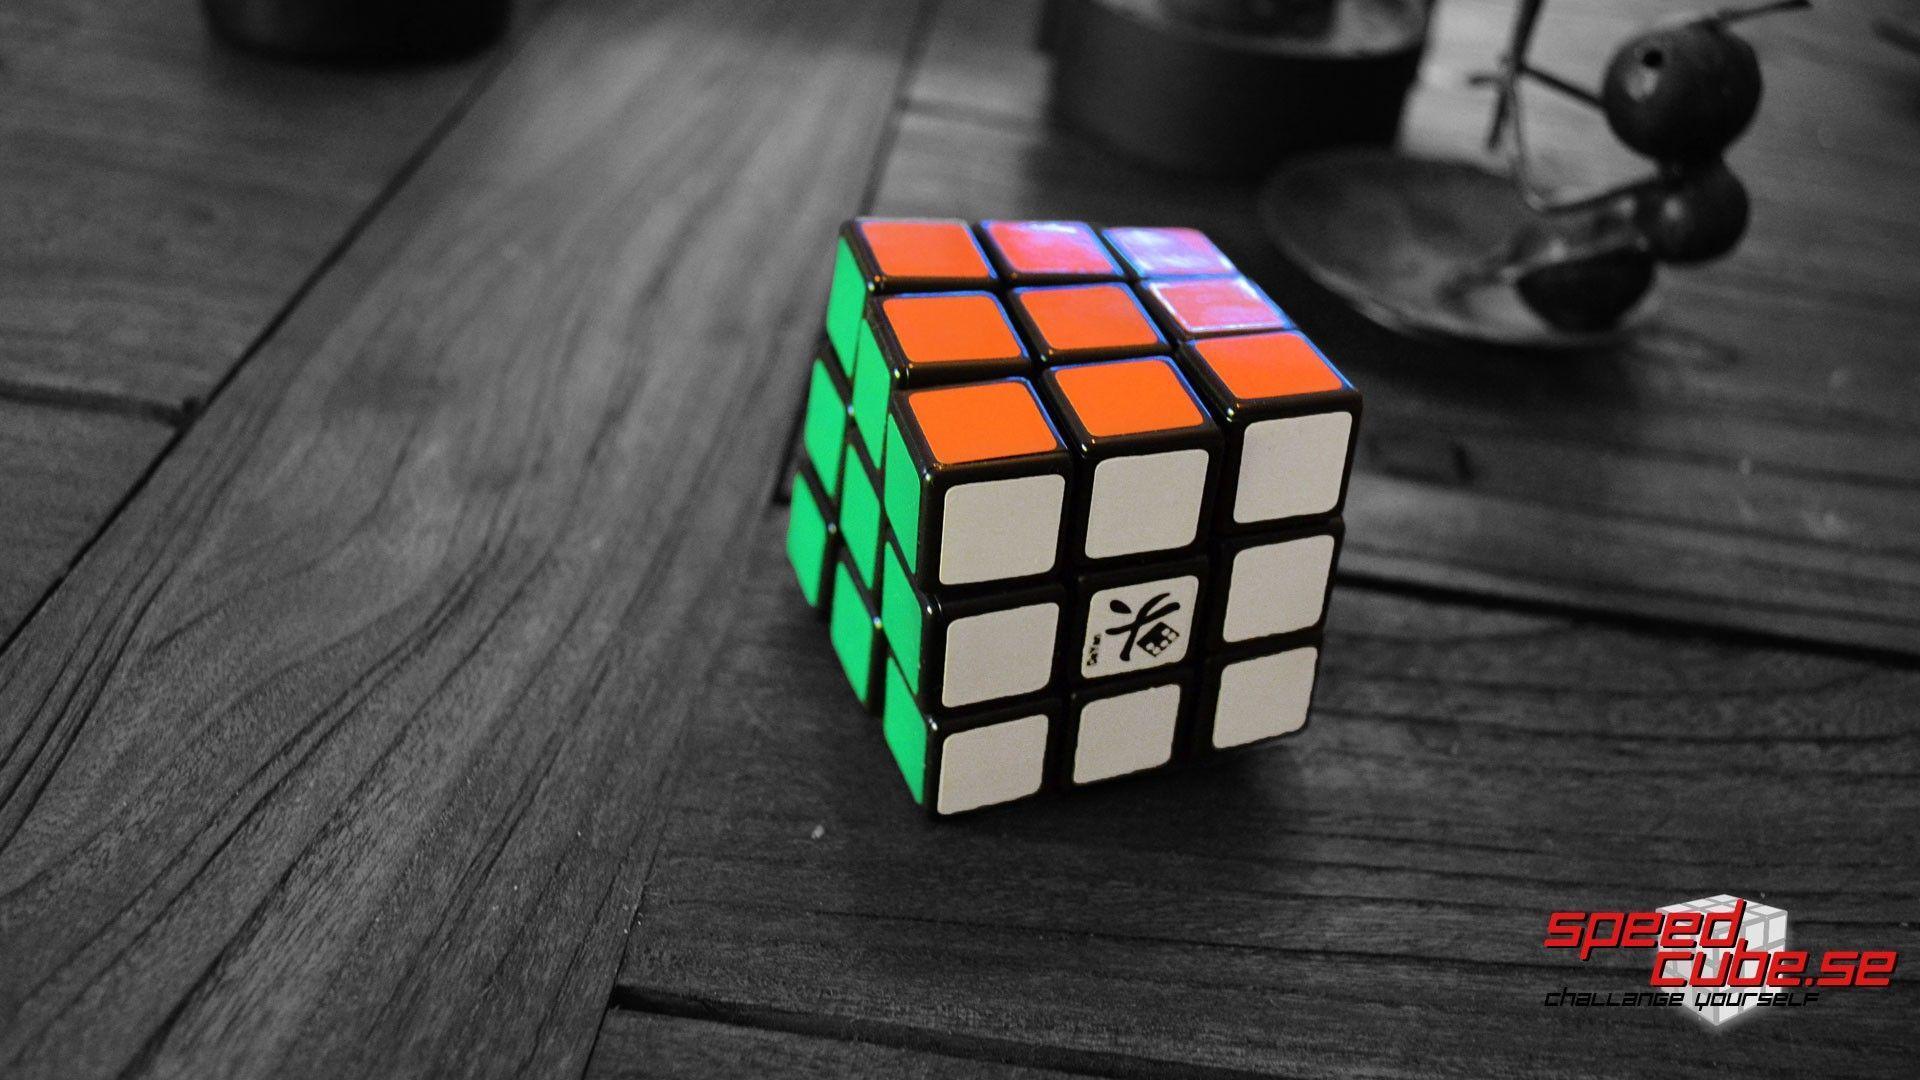 Rubiks Cube, speedcube Wallpaper / WallpaperJam.com